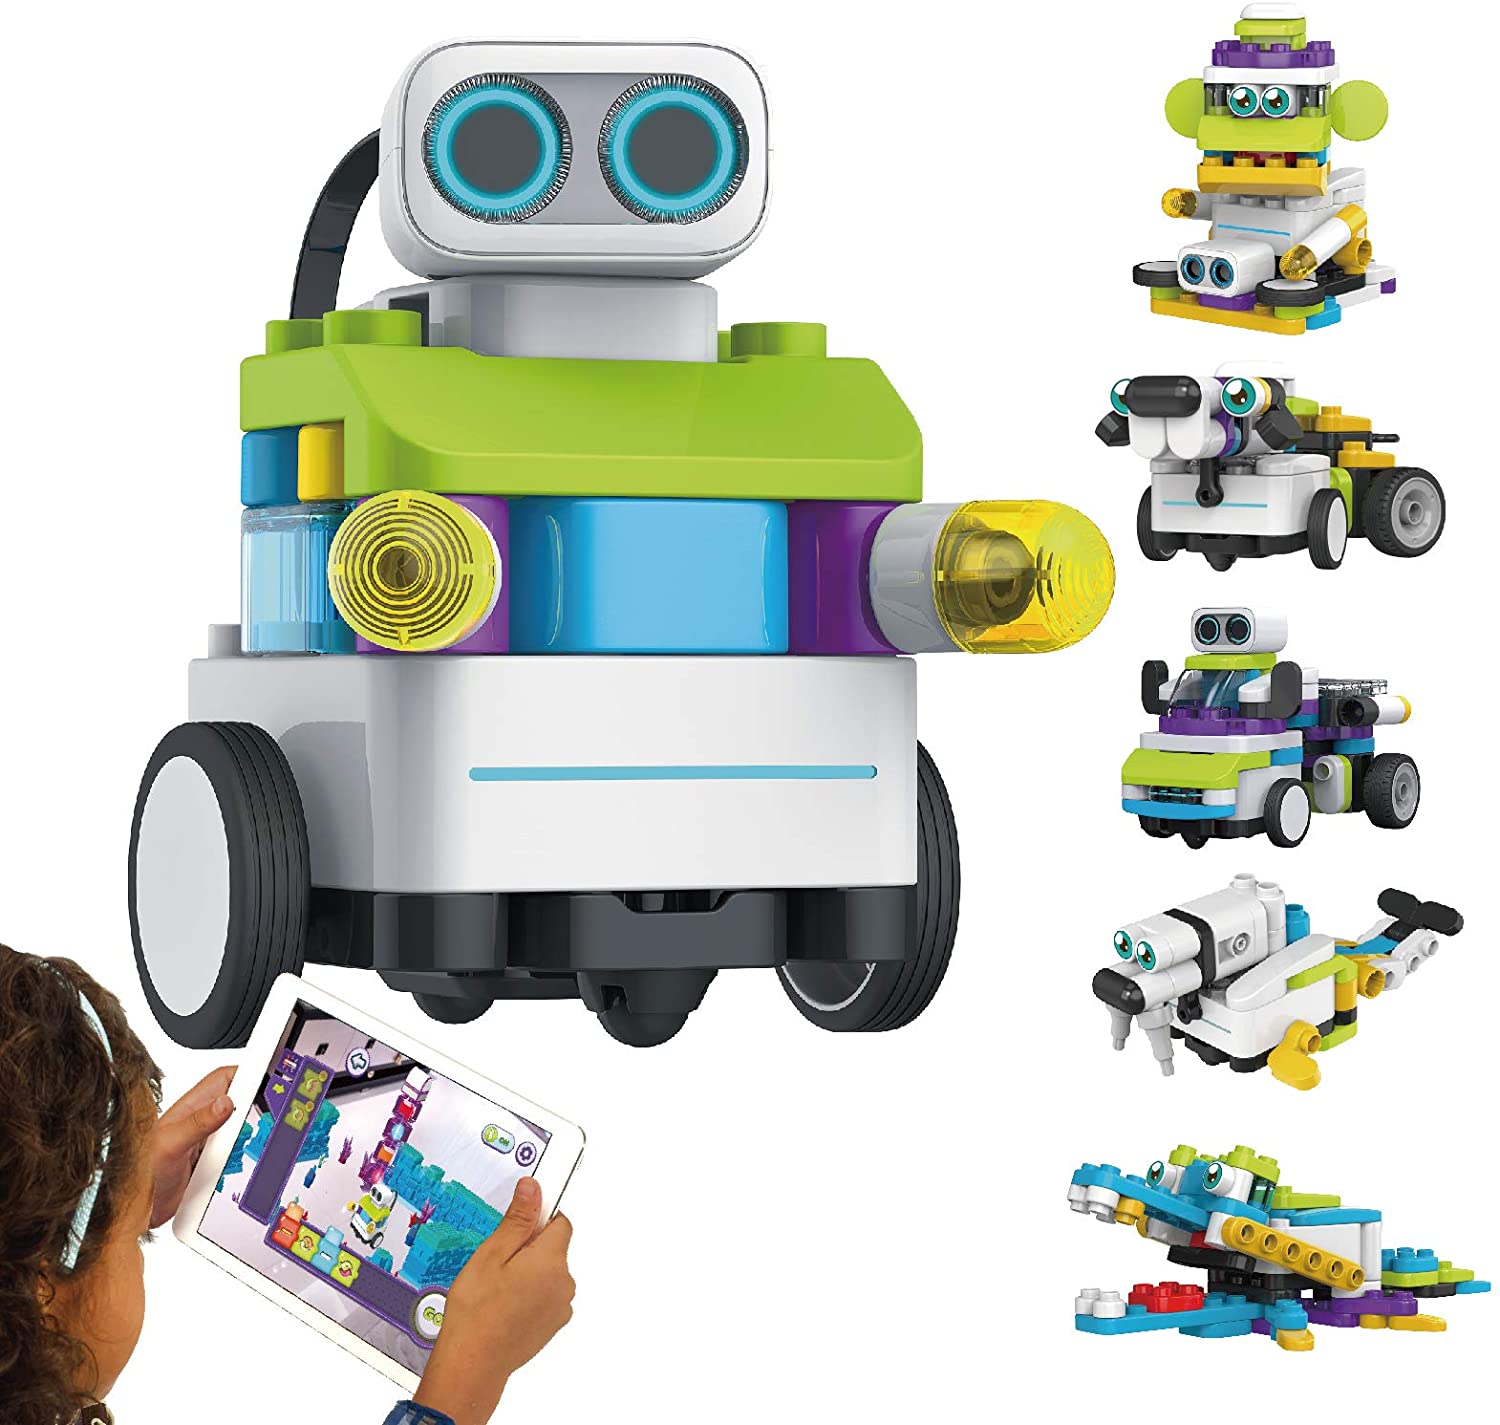 Botzees coding robot for kids